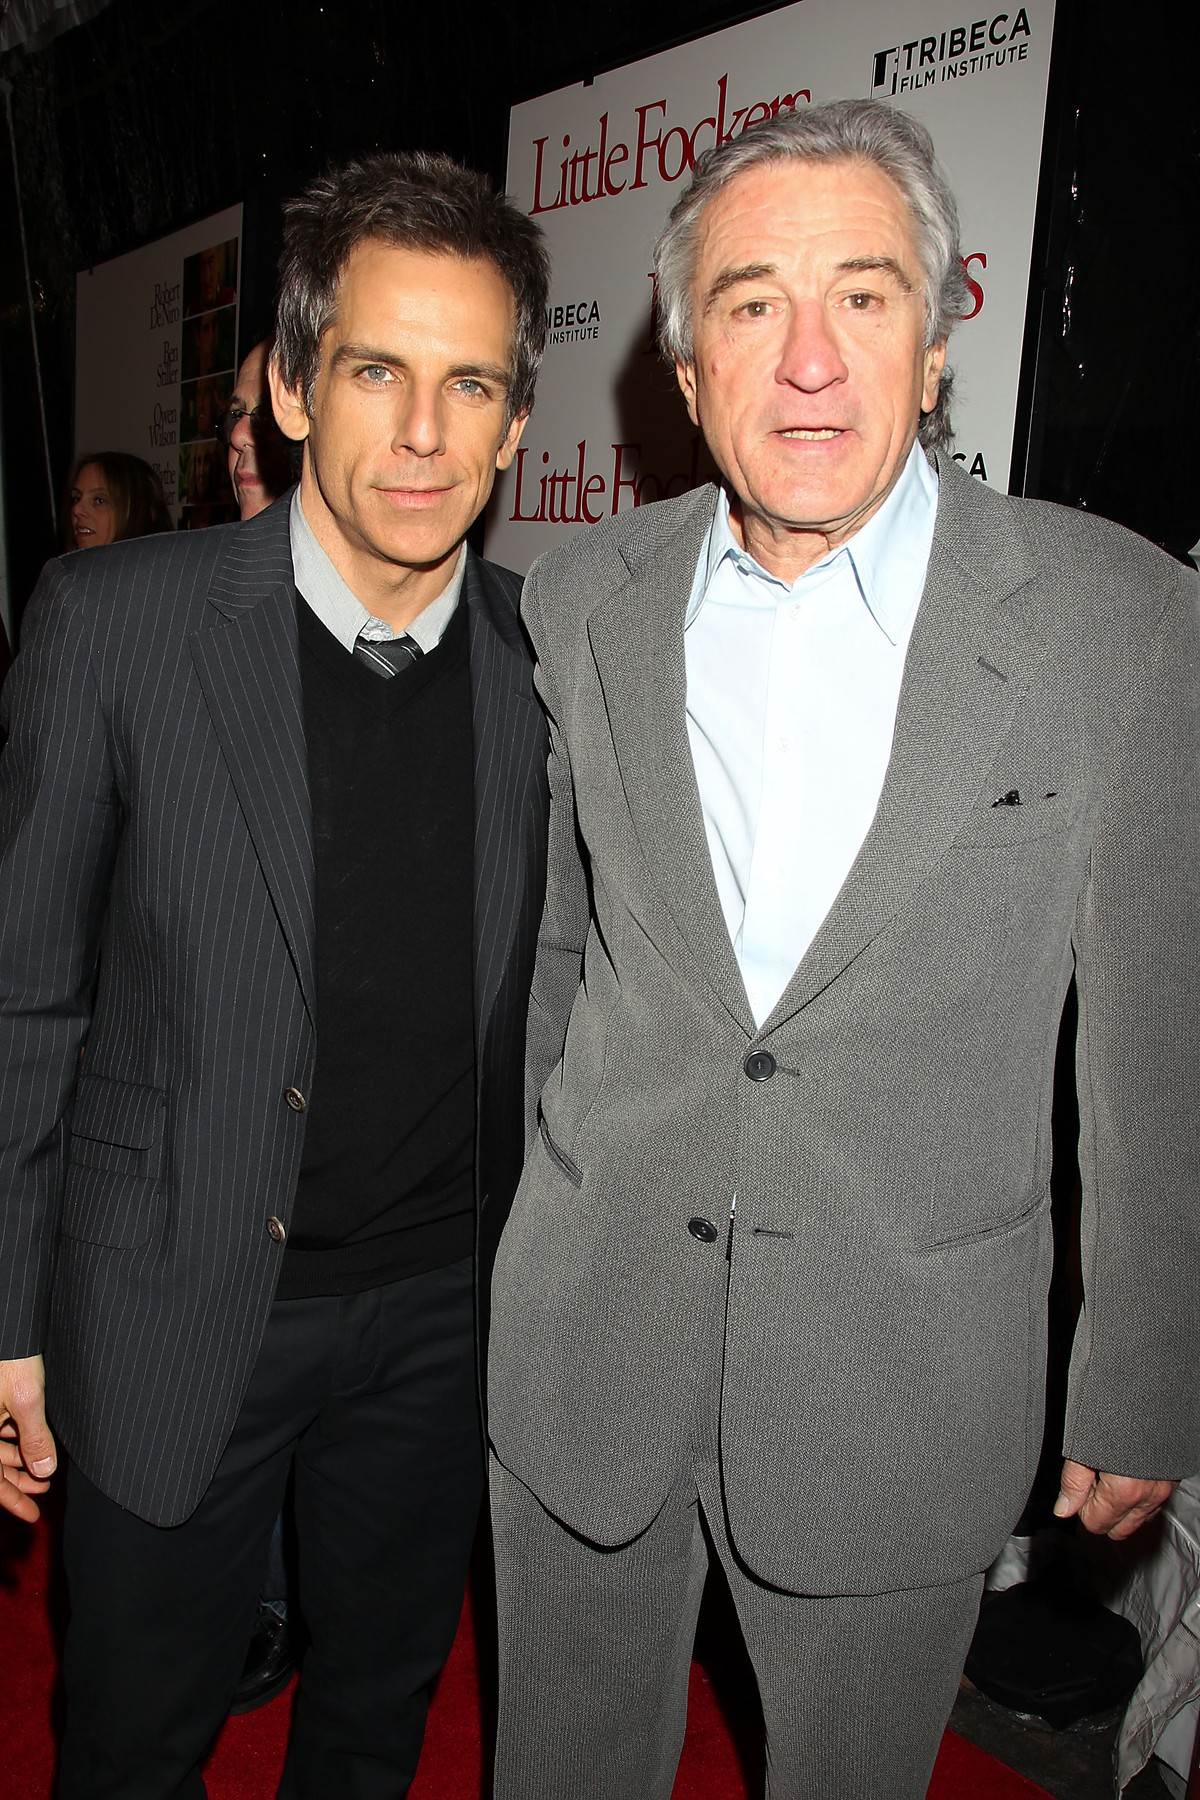 Ben Stiller i Robert De Niro glumački su kolege.